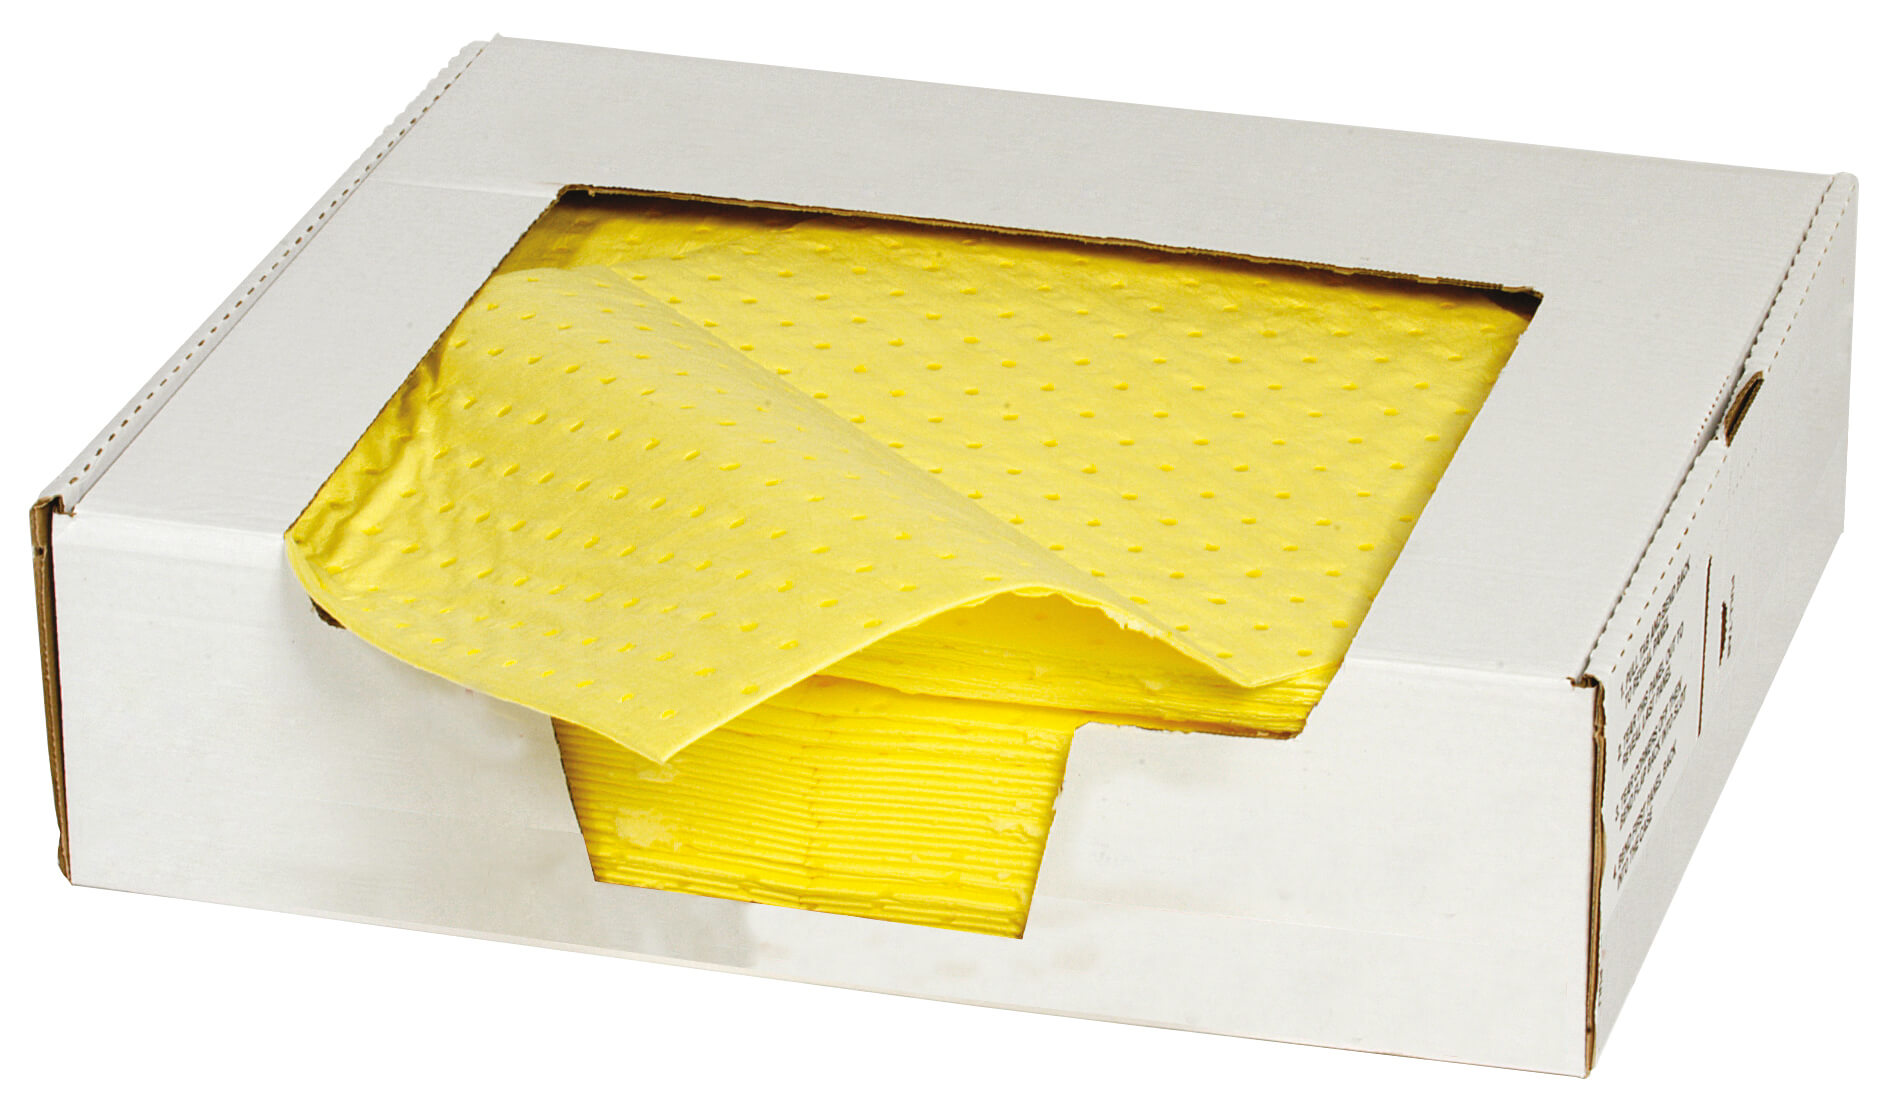 Medium Weight Chemical Absorbent Pads - Dispenser Box of 30